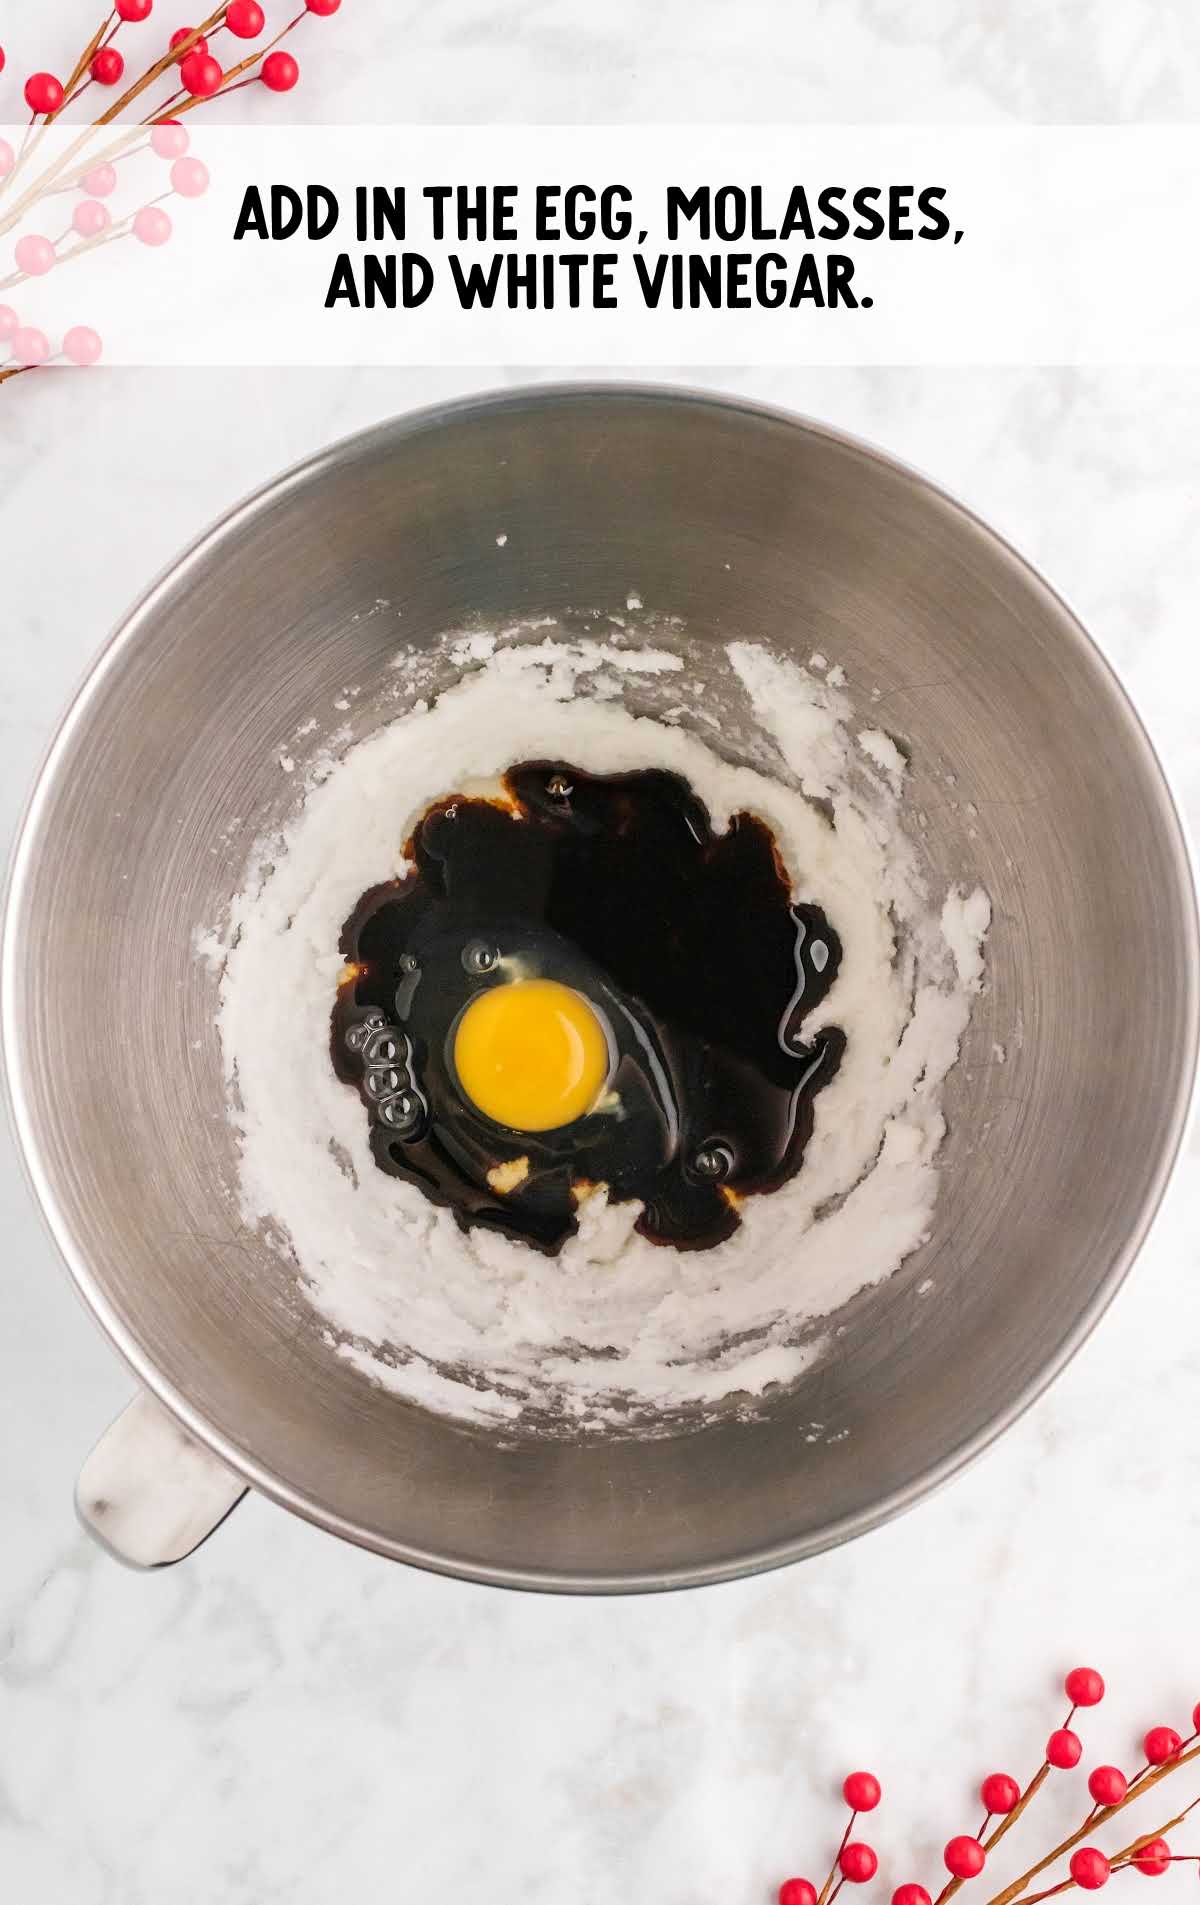 egg, molasses and white vinegar added to a bowl